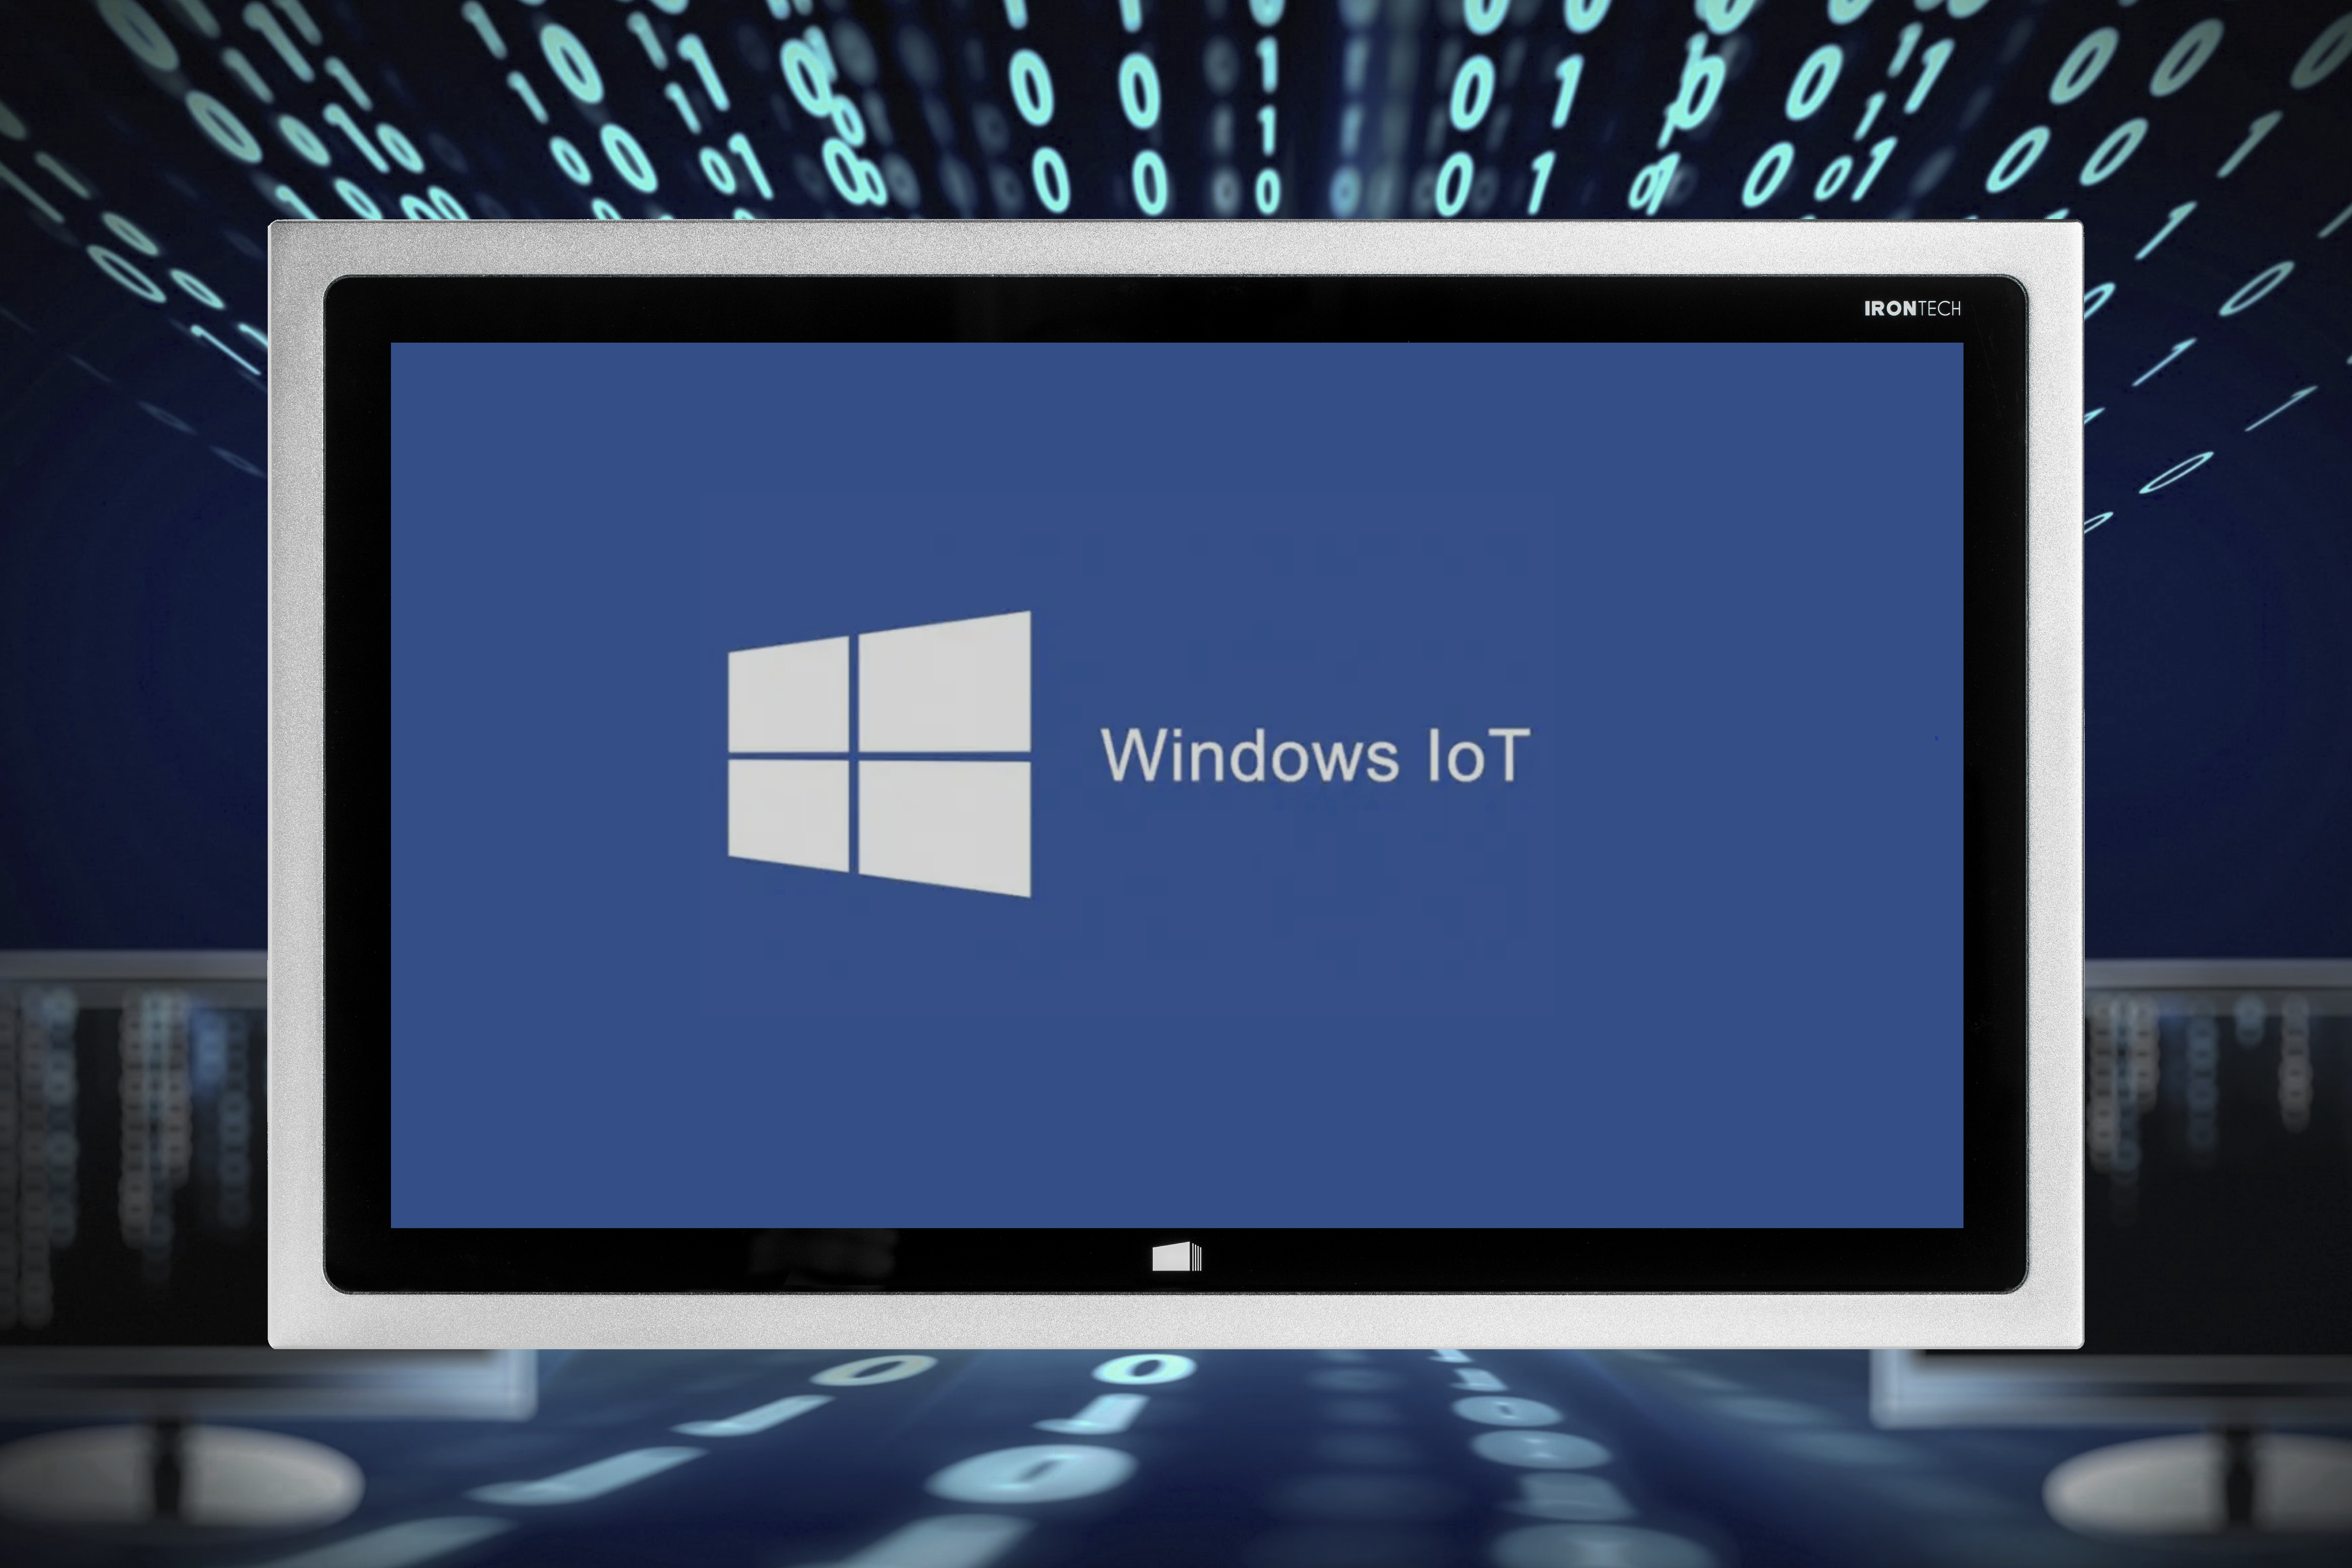 Microsoft Windows Corporate Operating System Provider